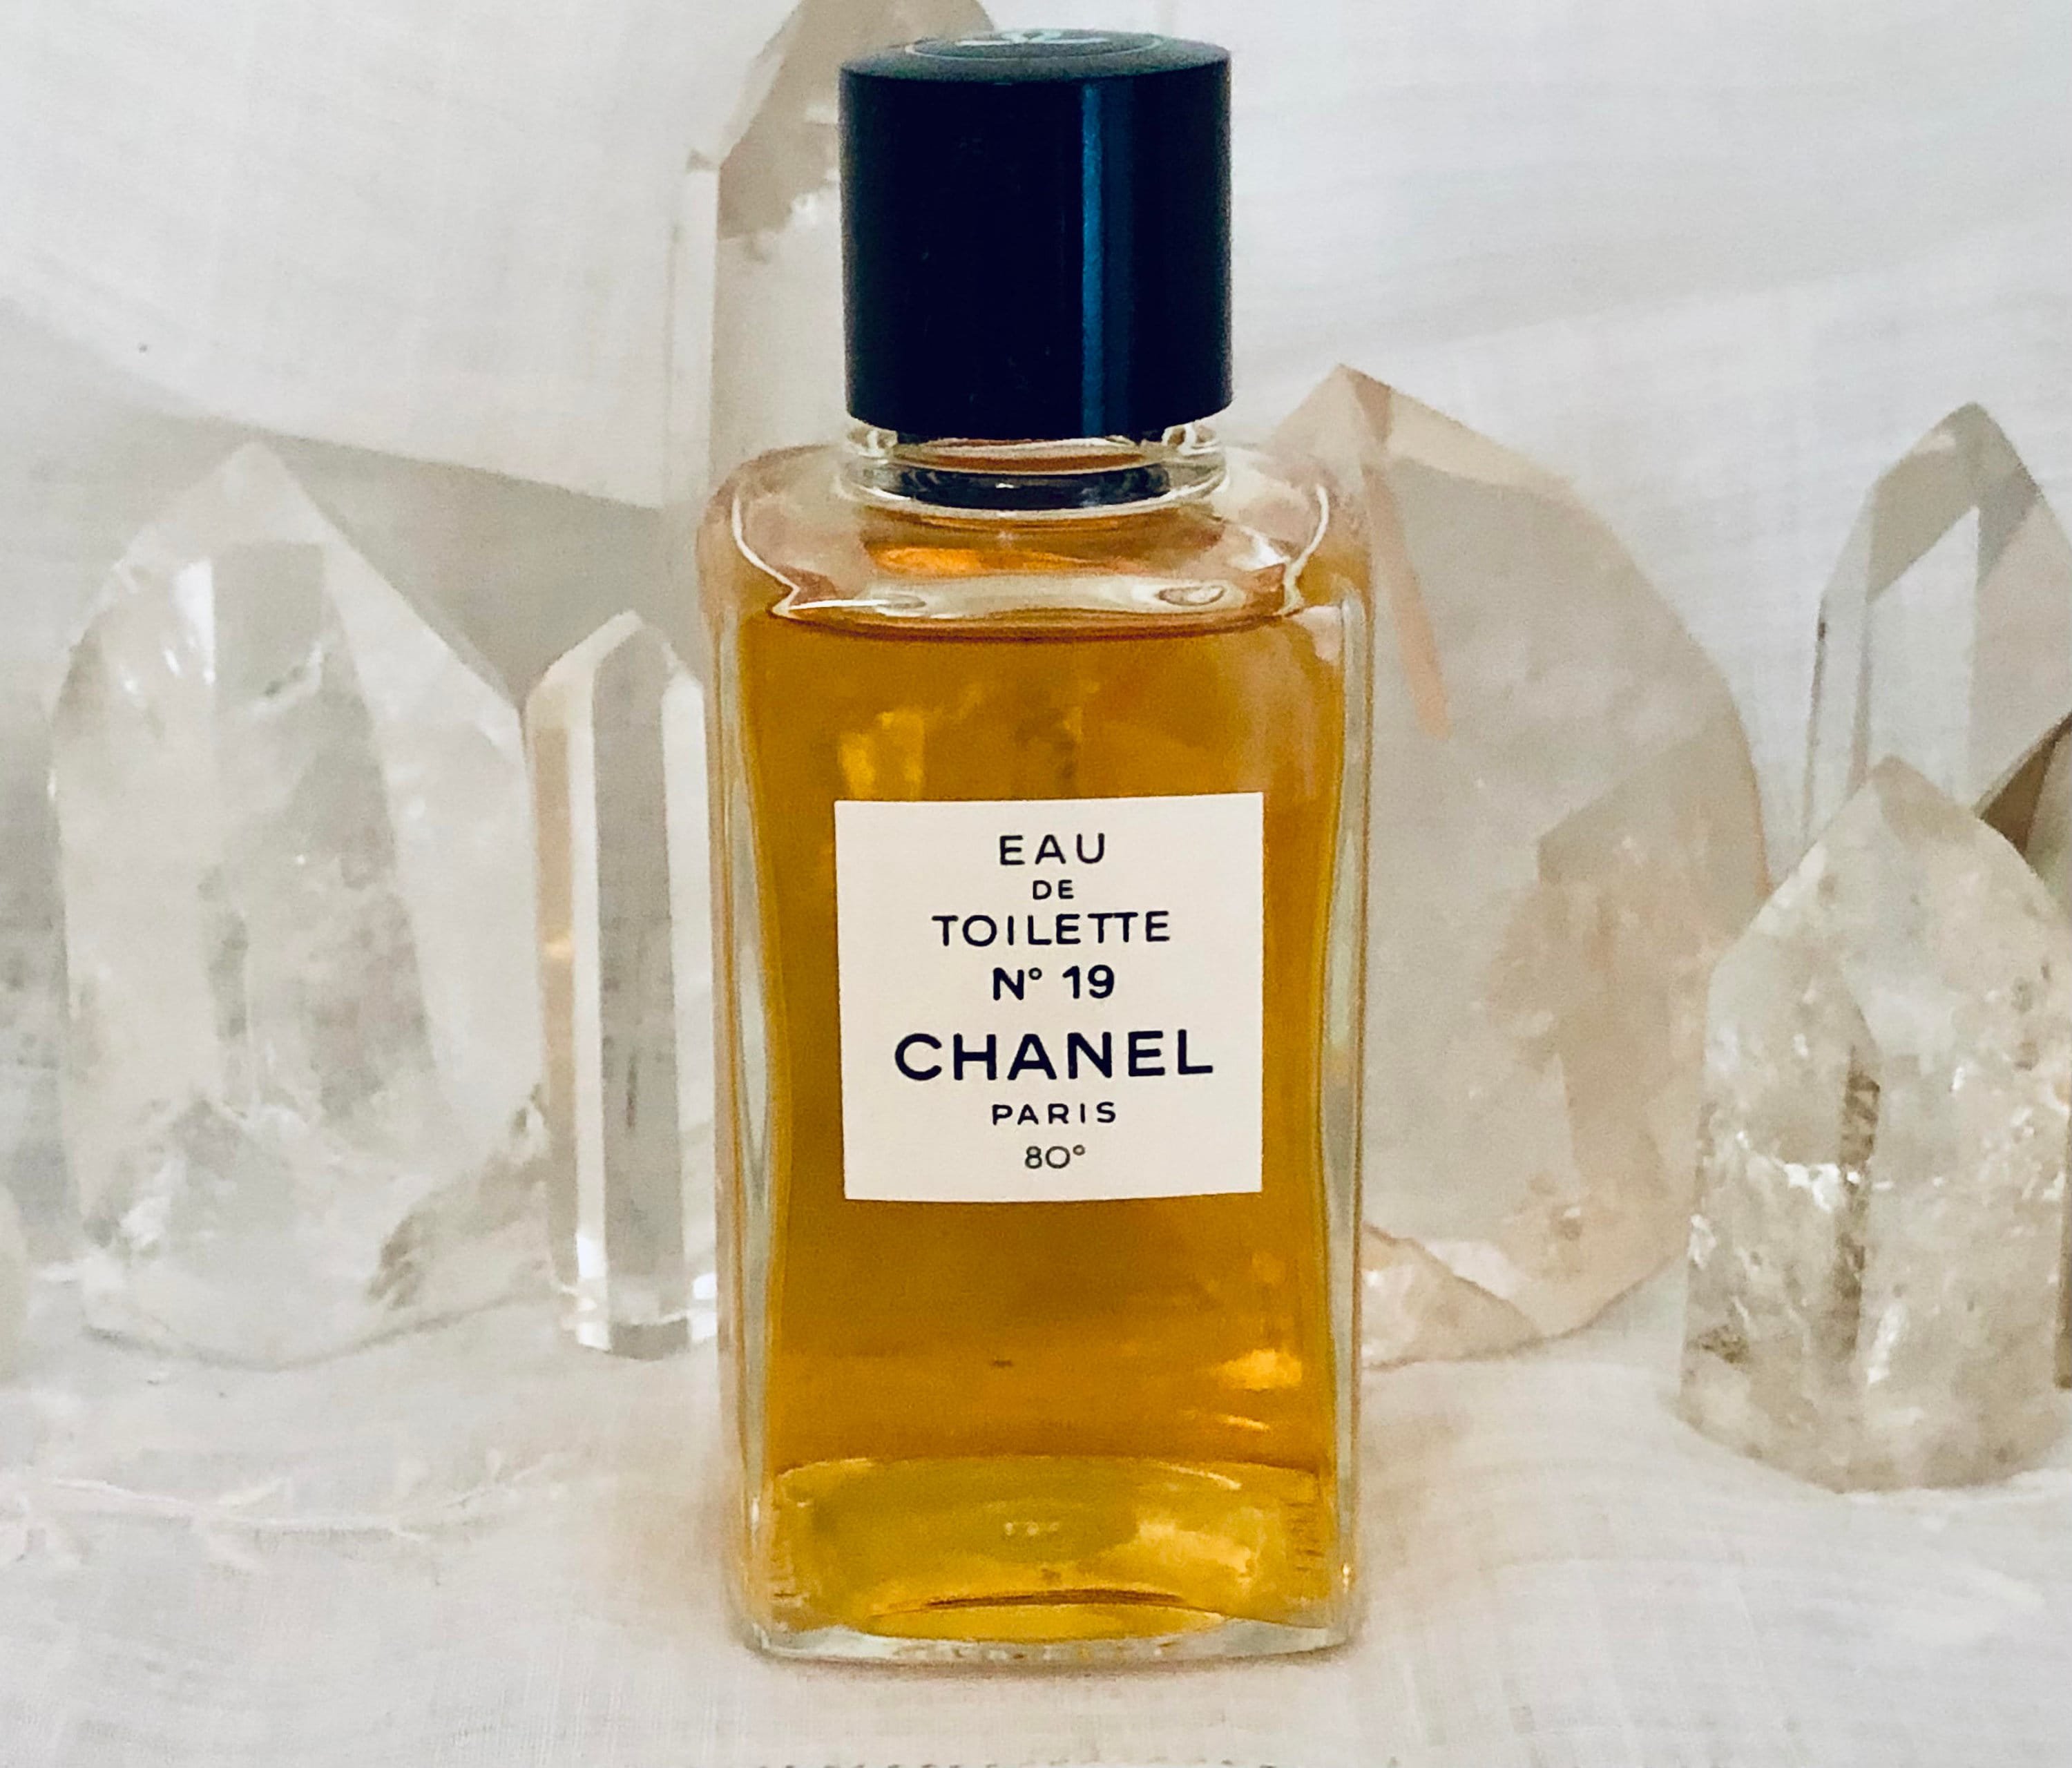 1972 CHANEL NO. 5 Perfume Eau De Chanel Cologne Perfume Sprays Print Ad  $9.95 - PicClick